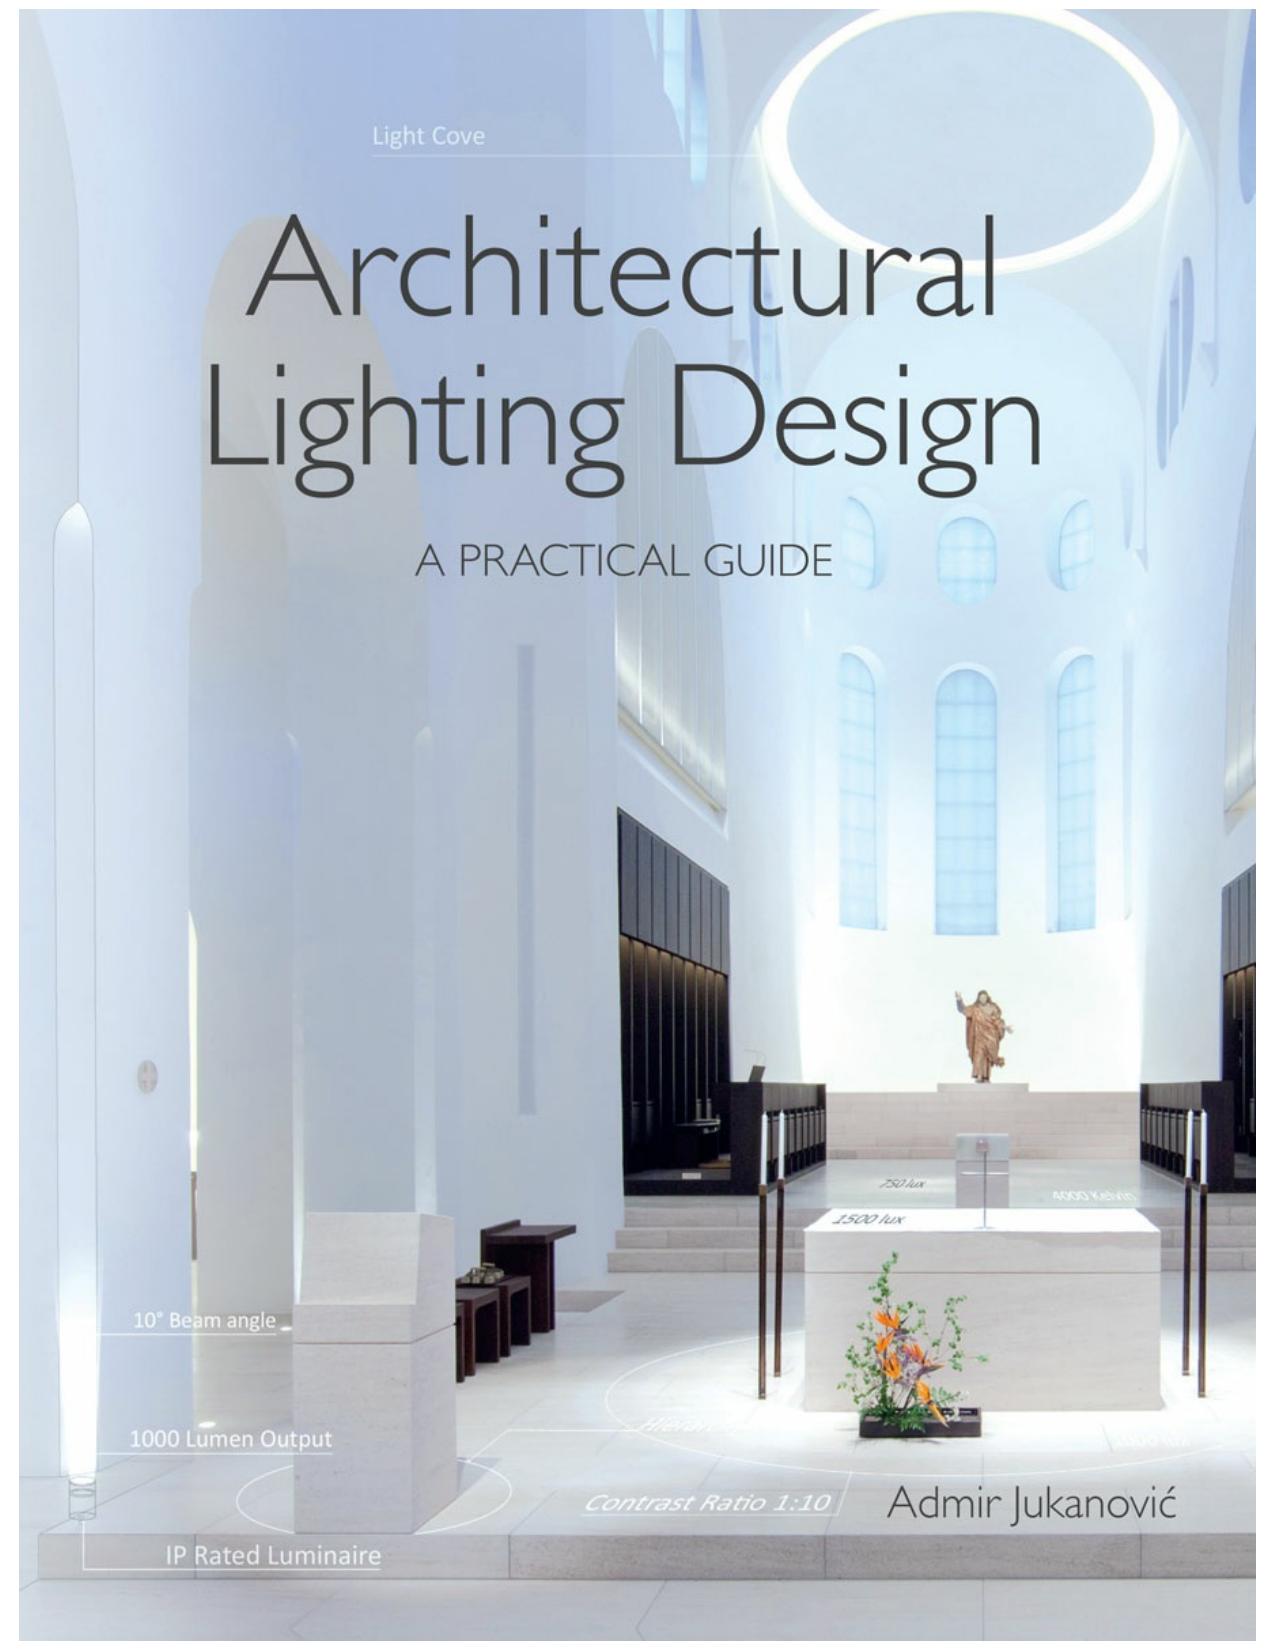 Architectural Lighting Design by Admir Jukanovic